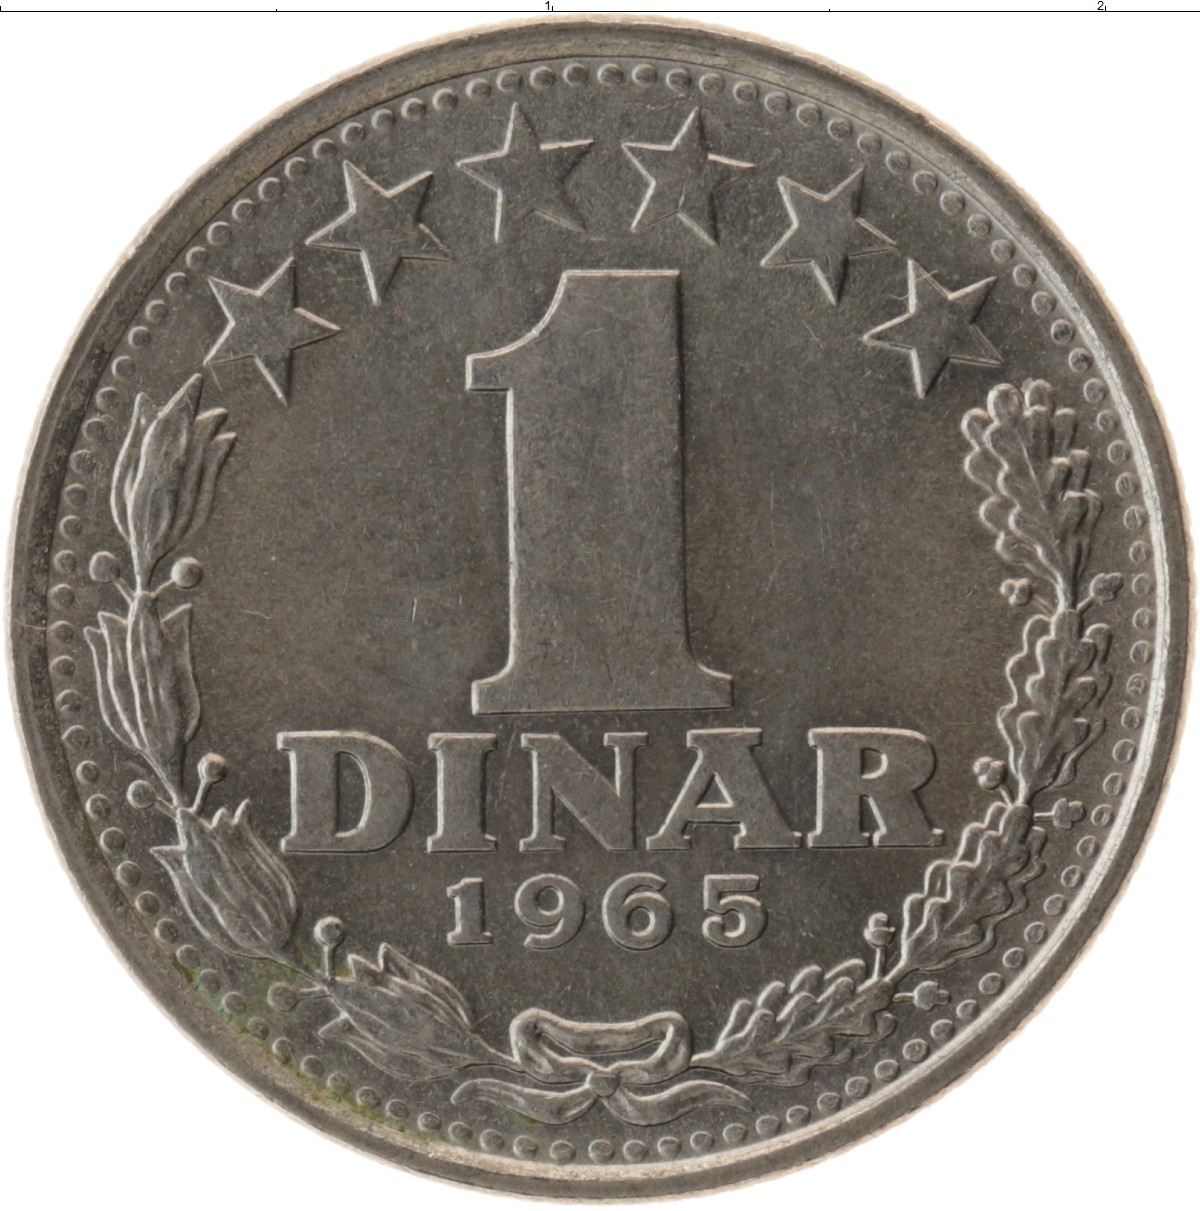 Deutsche mark. Монета Deutsche Mark. Deutsche Mark 1990 редкие монеты. Монета Германии 1 марка ФРГ 1990 года. Монеты Дойч марки.